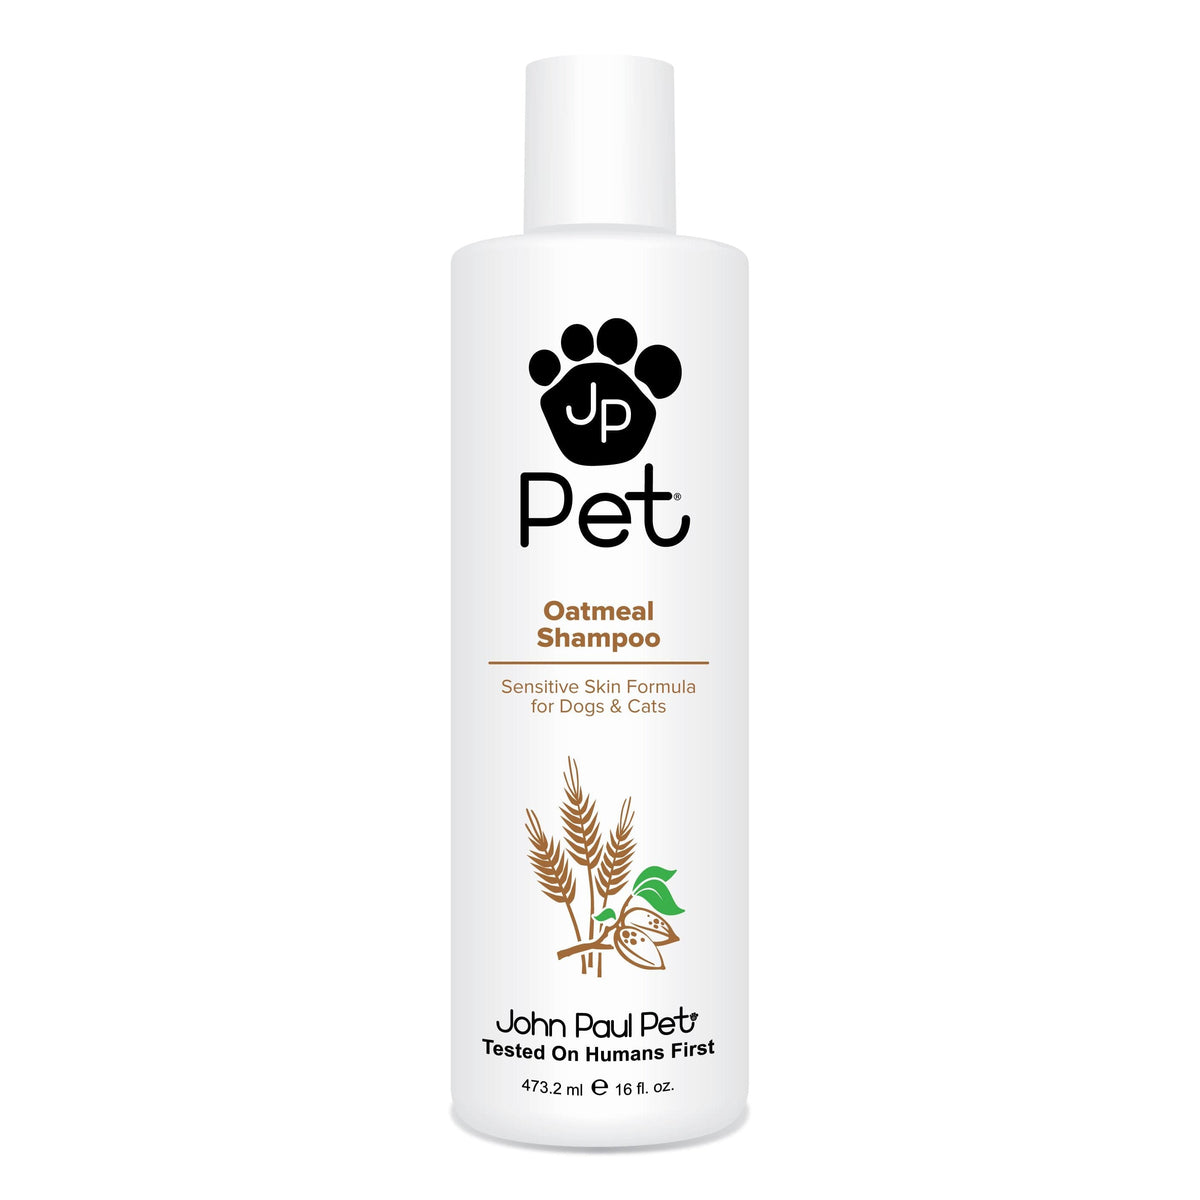 JP Pet Oatmeal Shampoo 473ml Pet - JP Pet - Luxe Pacifique